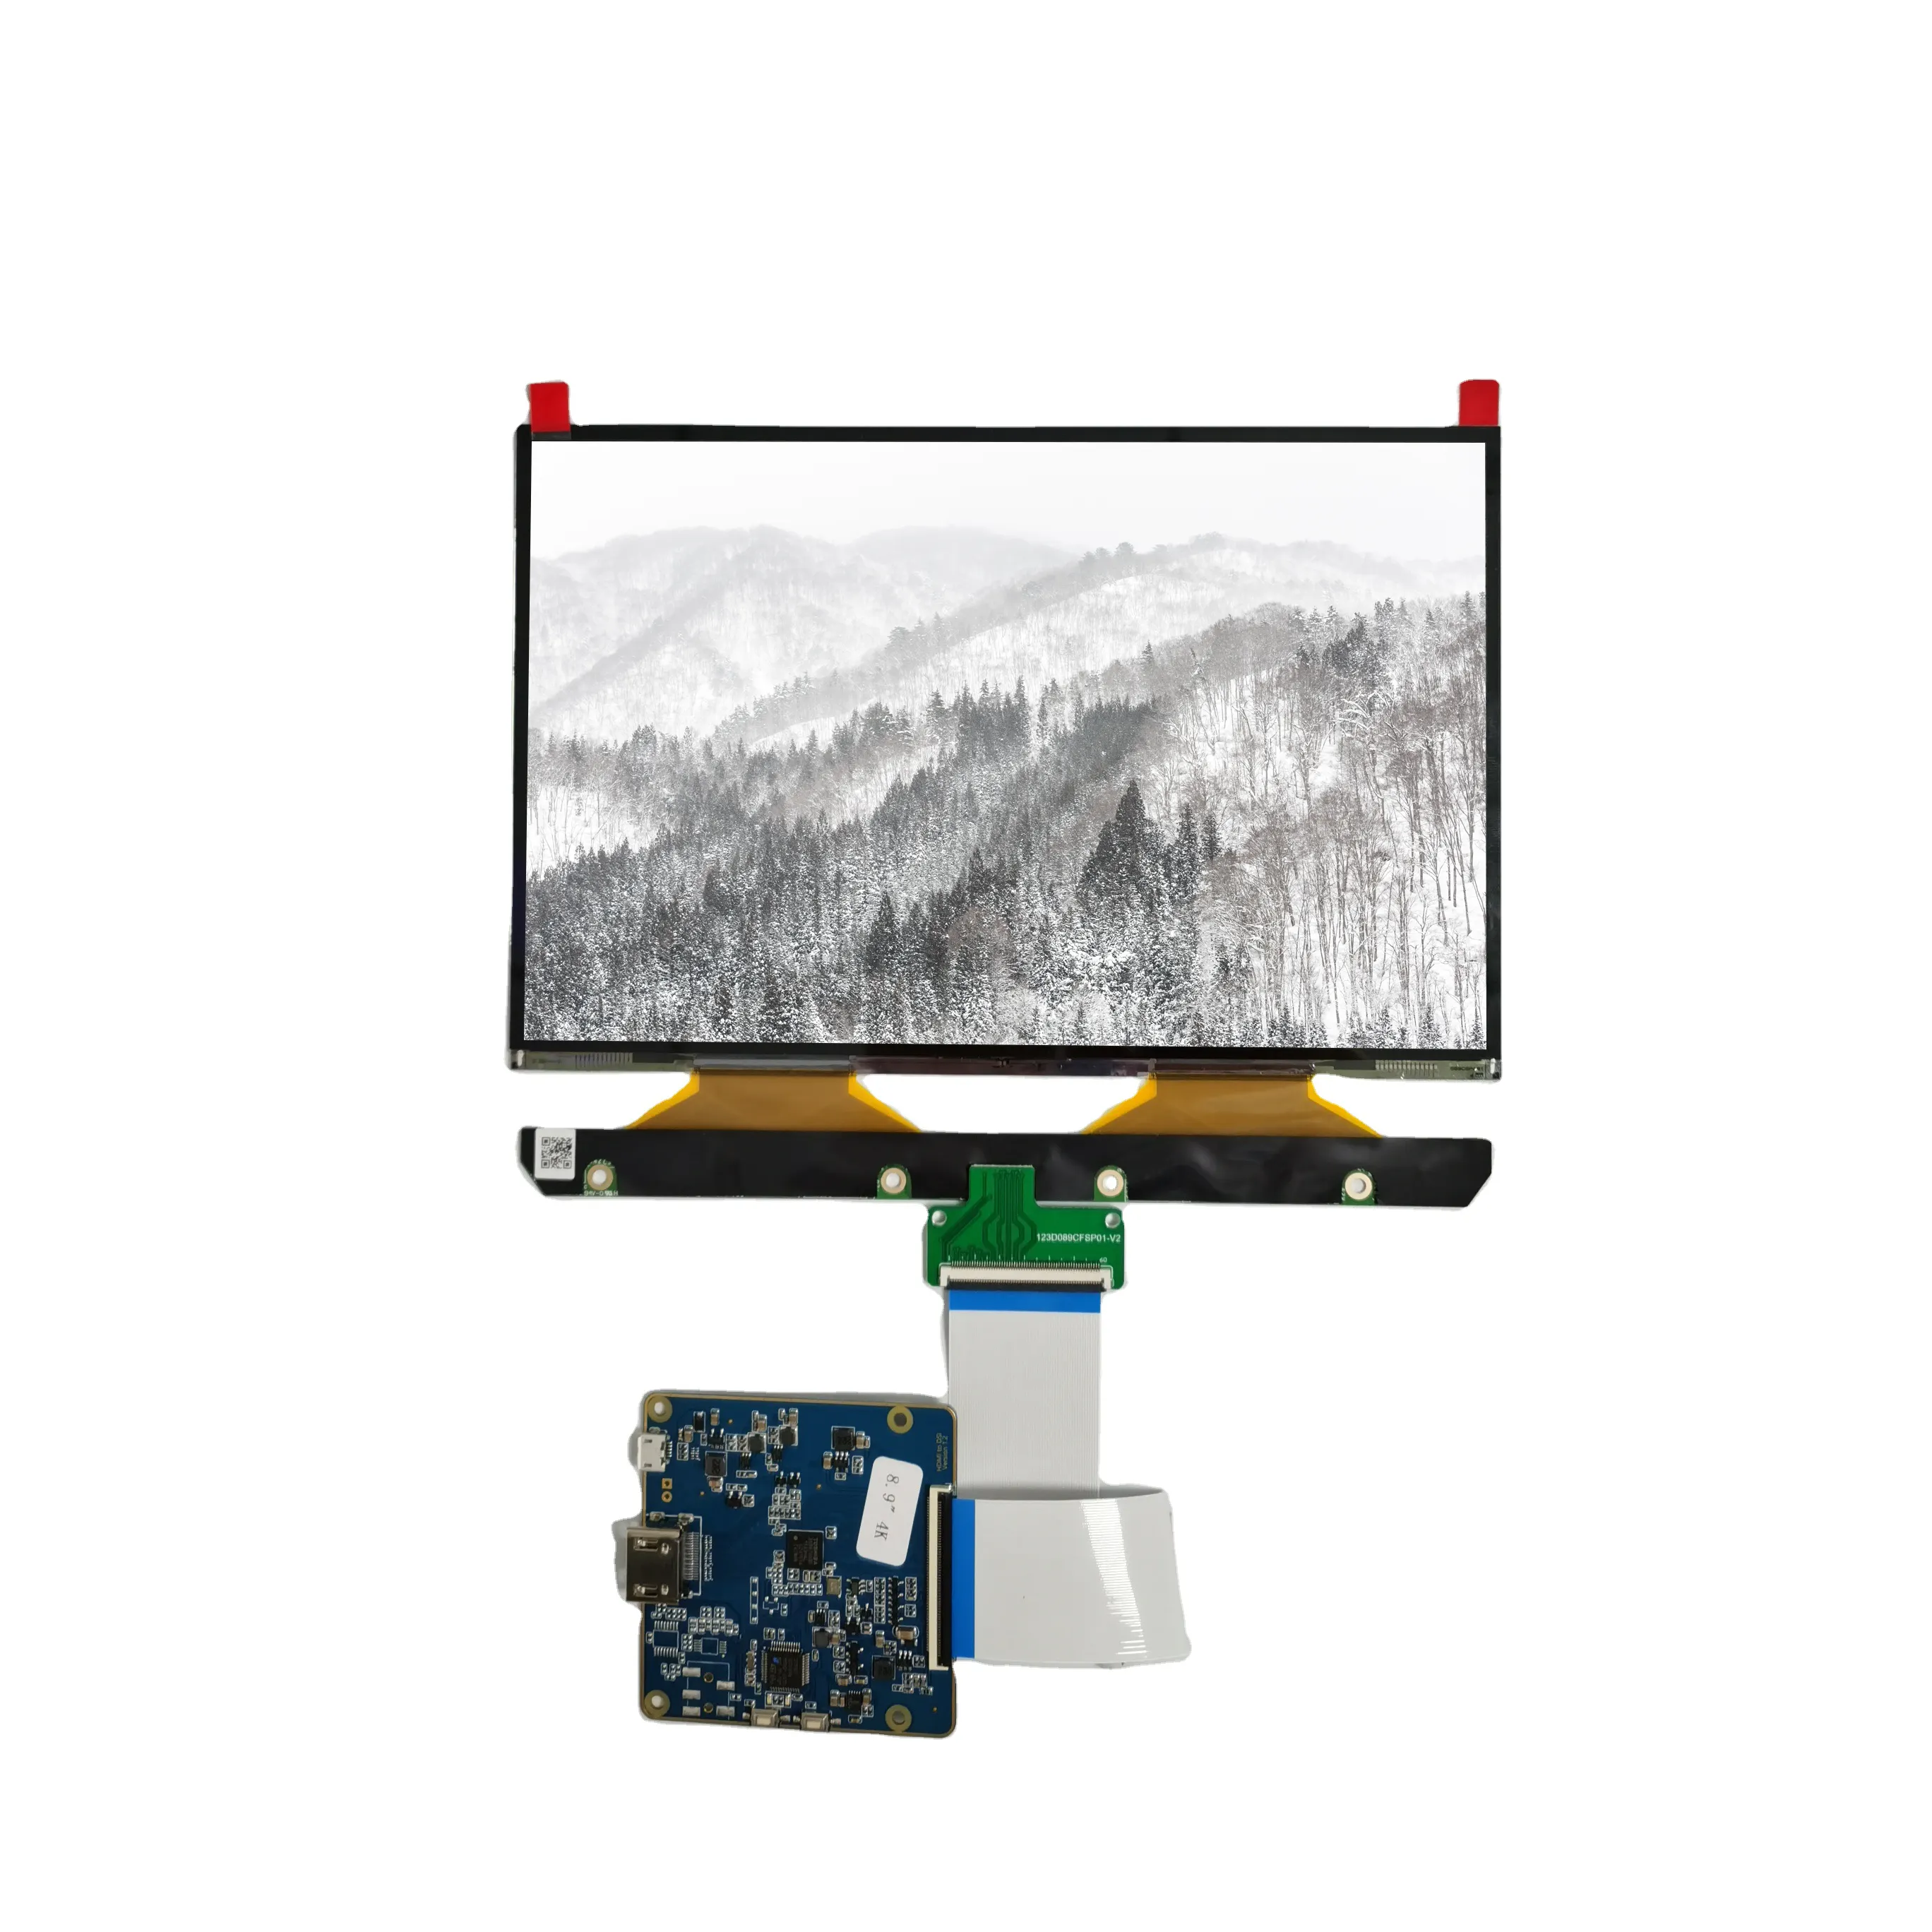 Mipi hdm-ich 3840x240 0 8.9 zoll 4K tft monochrome hd videos nach LCD mit controller board